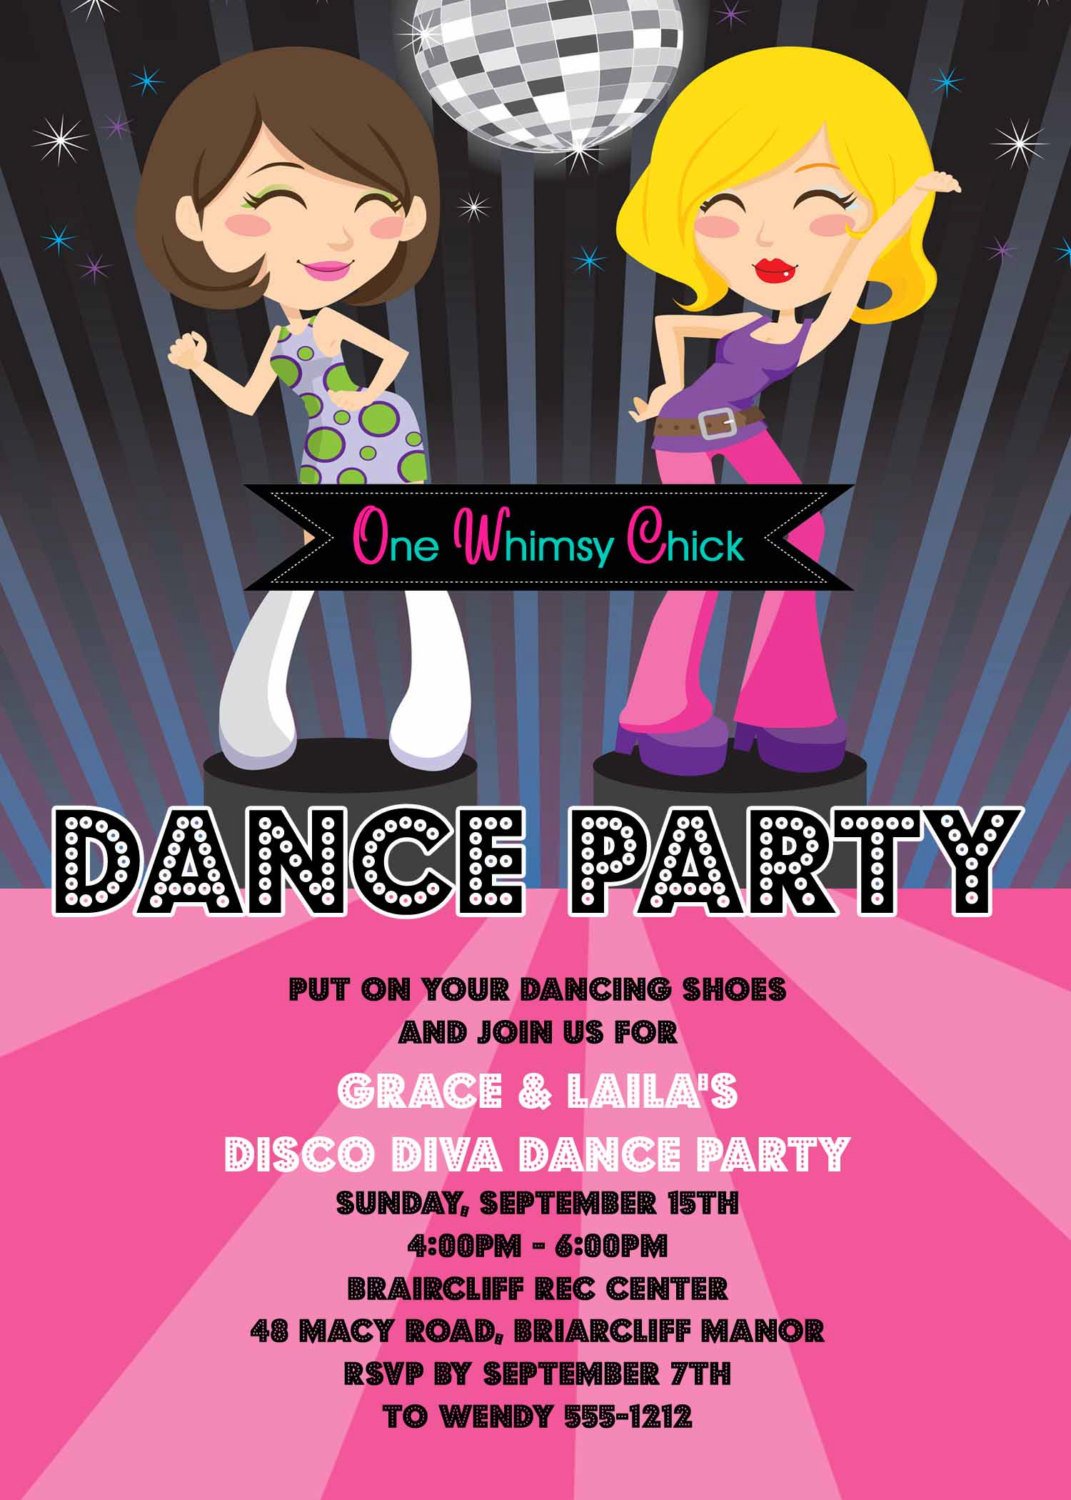 Dance Party Birthday Invitations